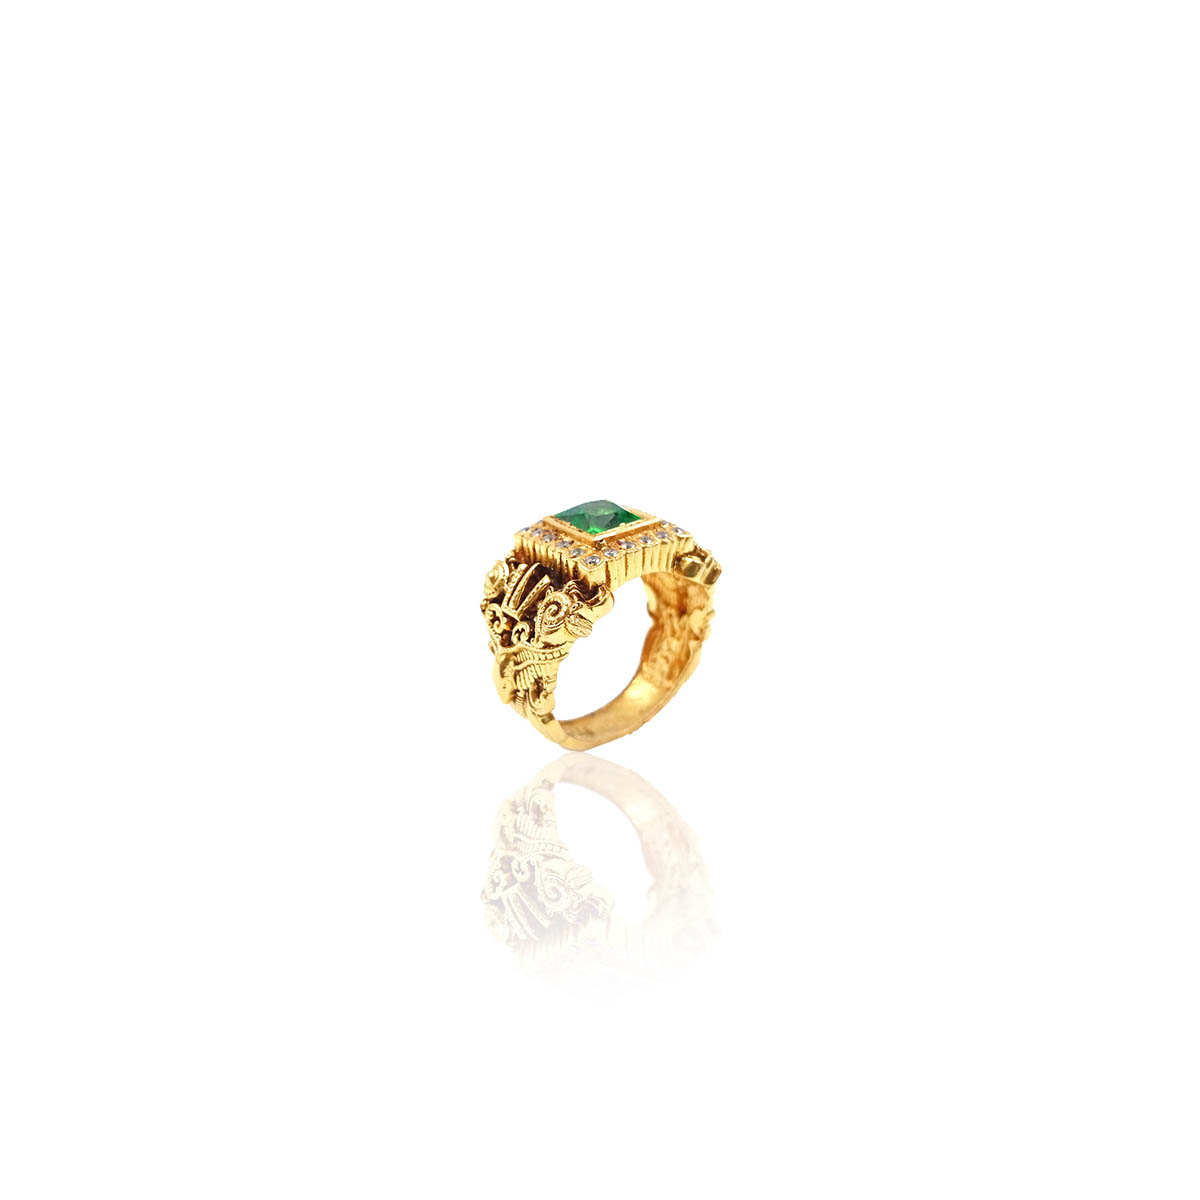 Male 916 22kt Men Wedding Gold Ring, 6g at Rs 28000/piece in Vasai Virar |  ID: 26188291248